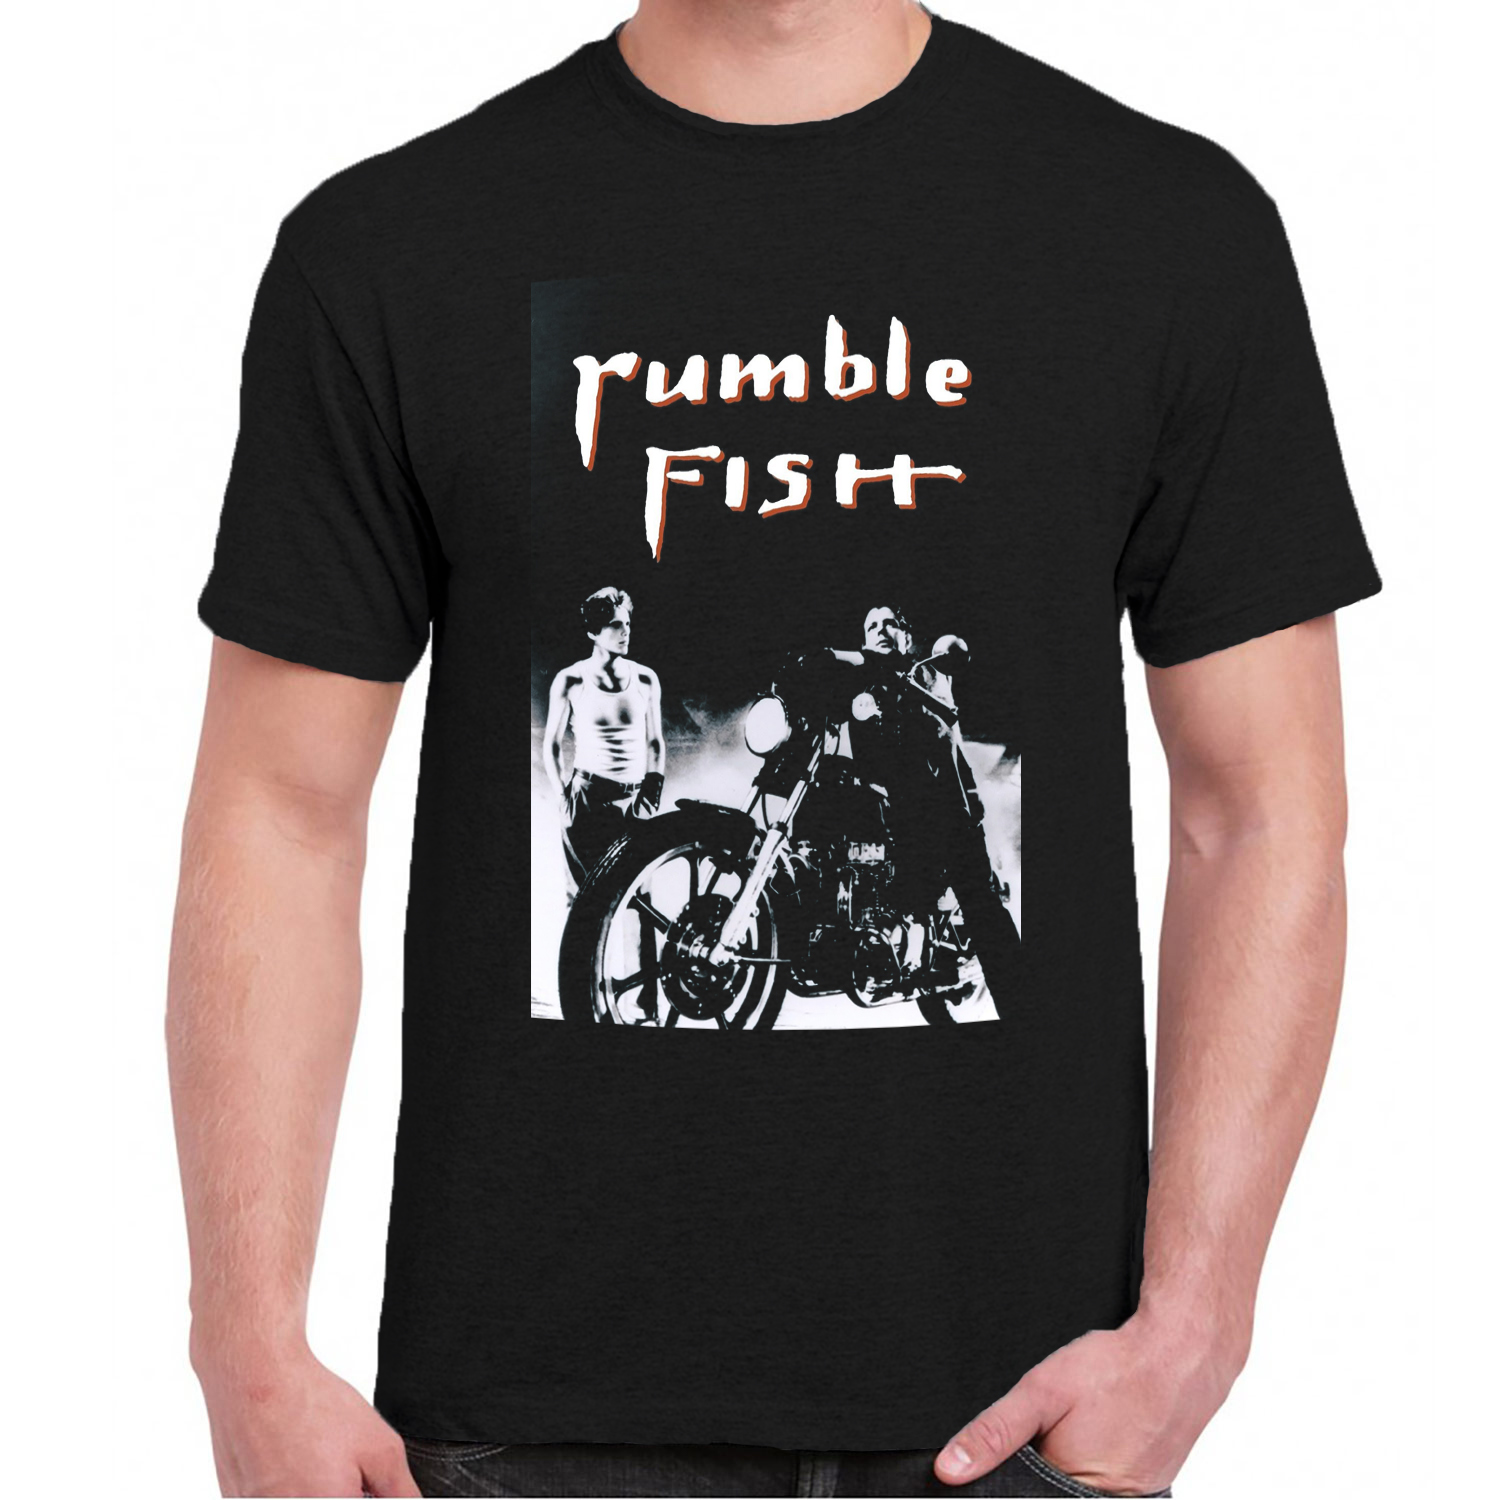 Rumble Fish movie t-shirt 